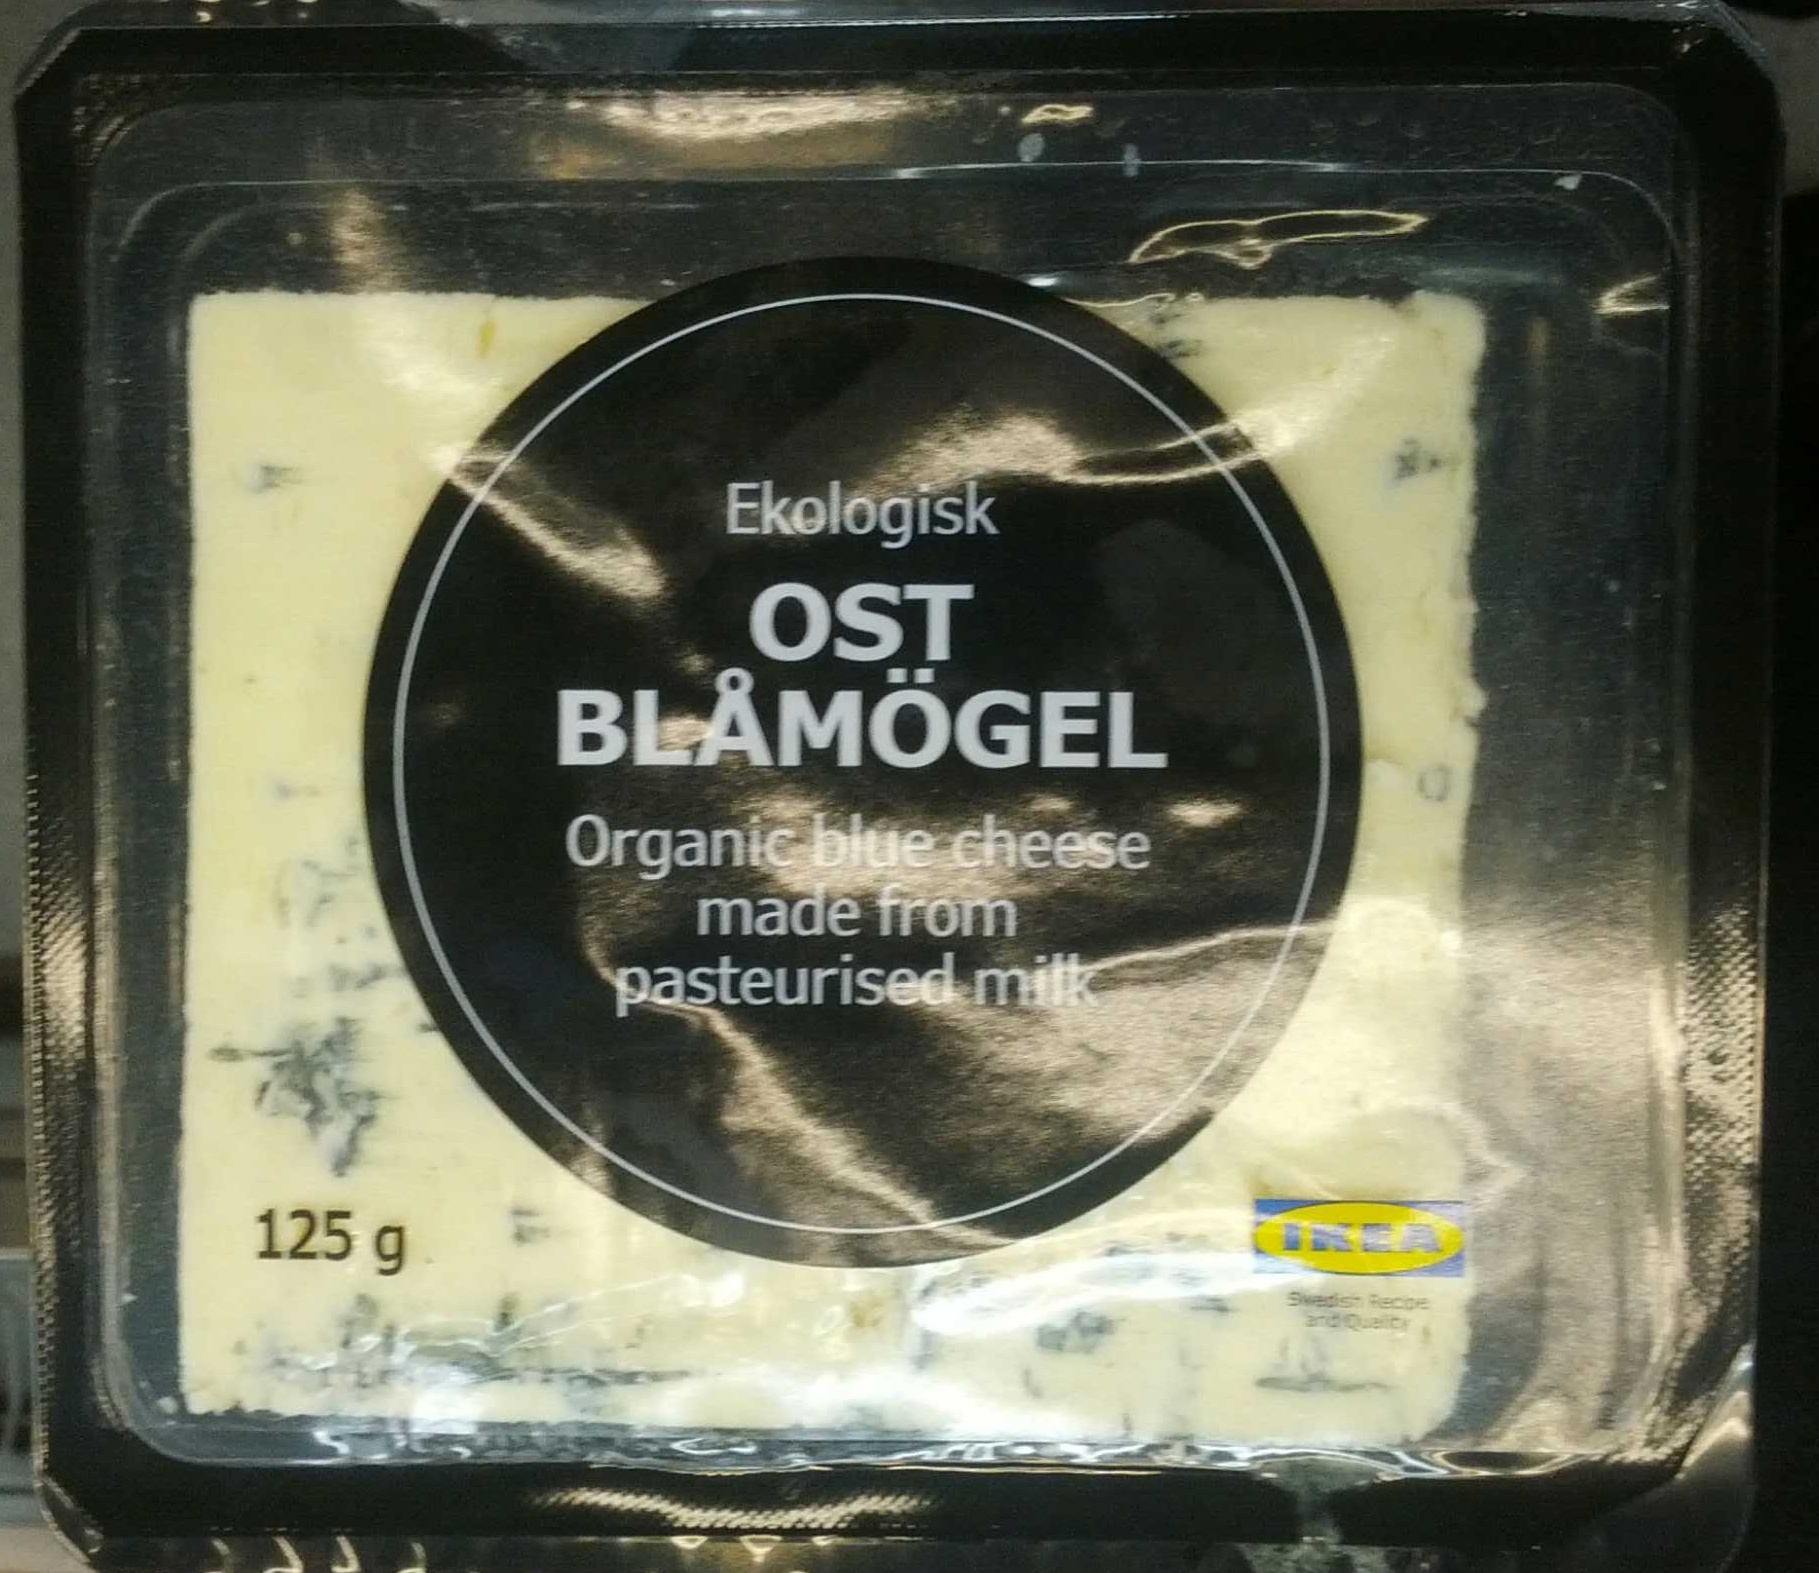 Ekologisk Ost Blåmögel (36% MG) - Produkt - en